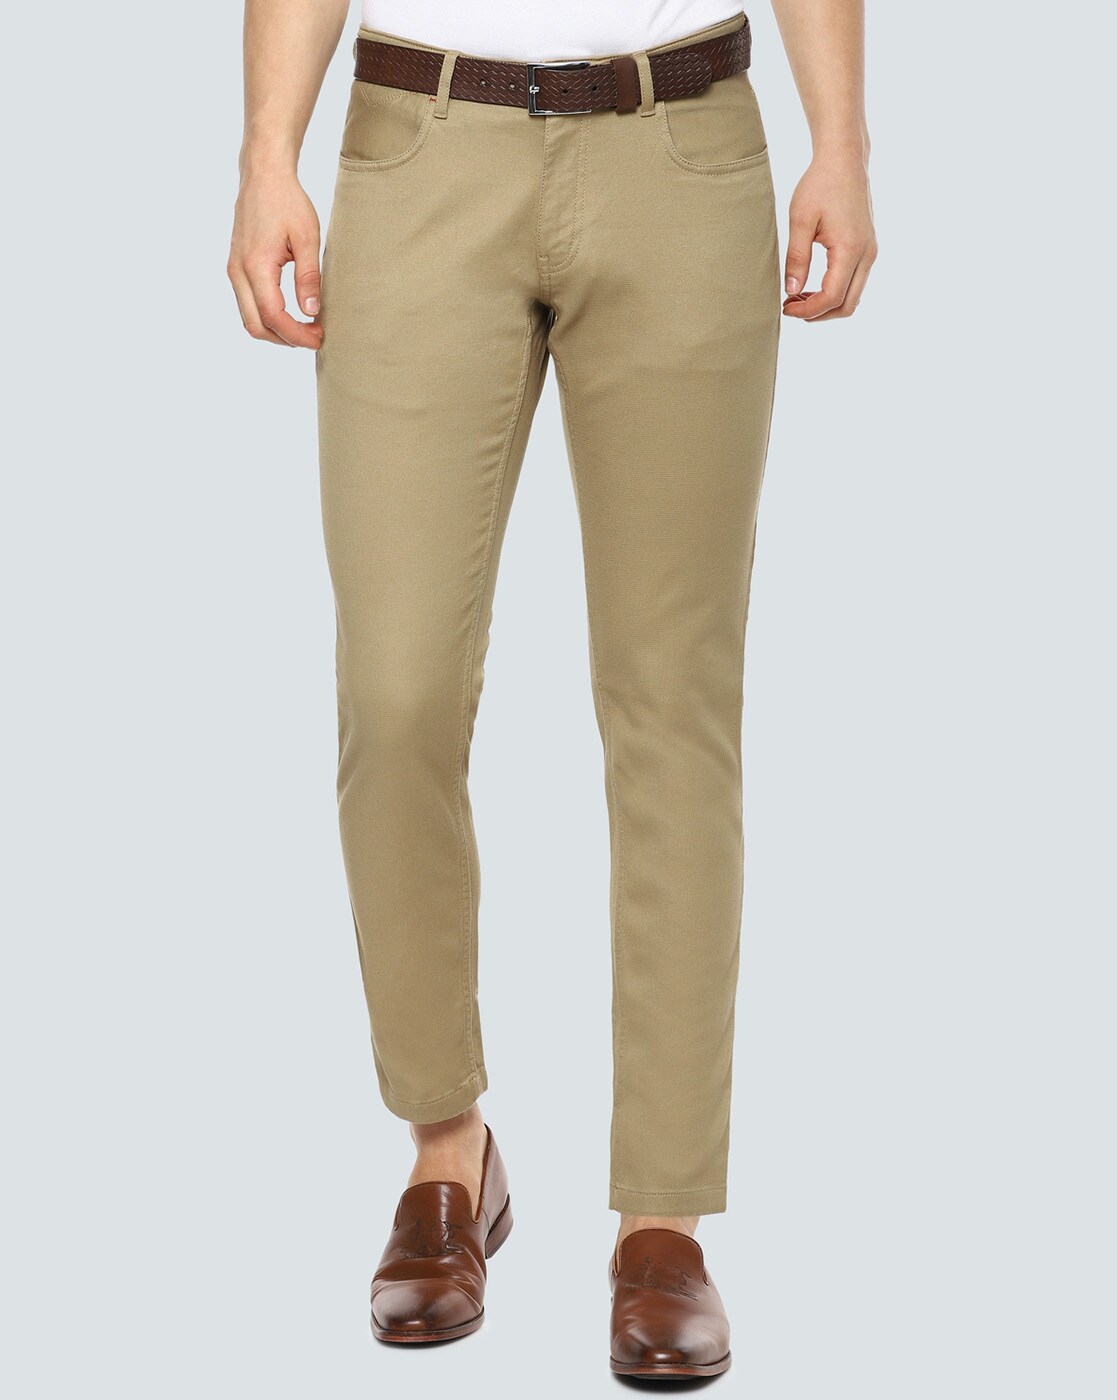 Pepe Jeans Khaki Trousers - Buy Pepe Jeans Khaki Trousers online in India